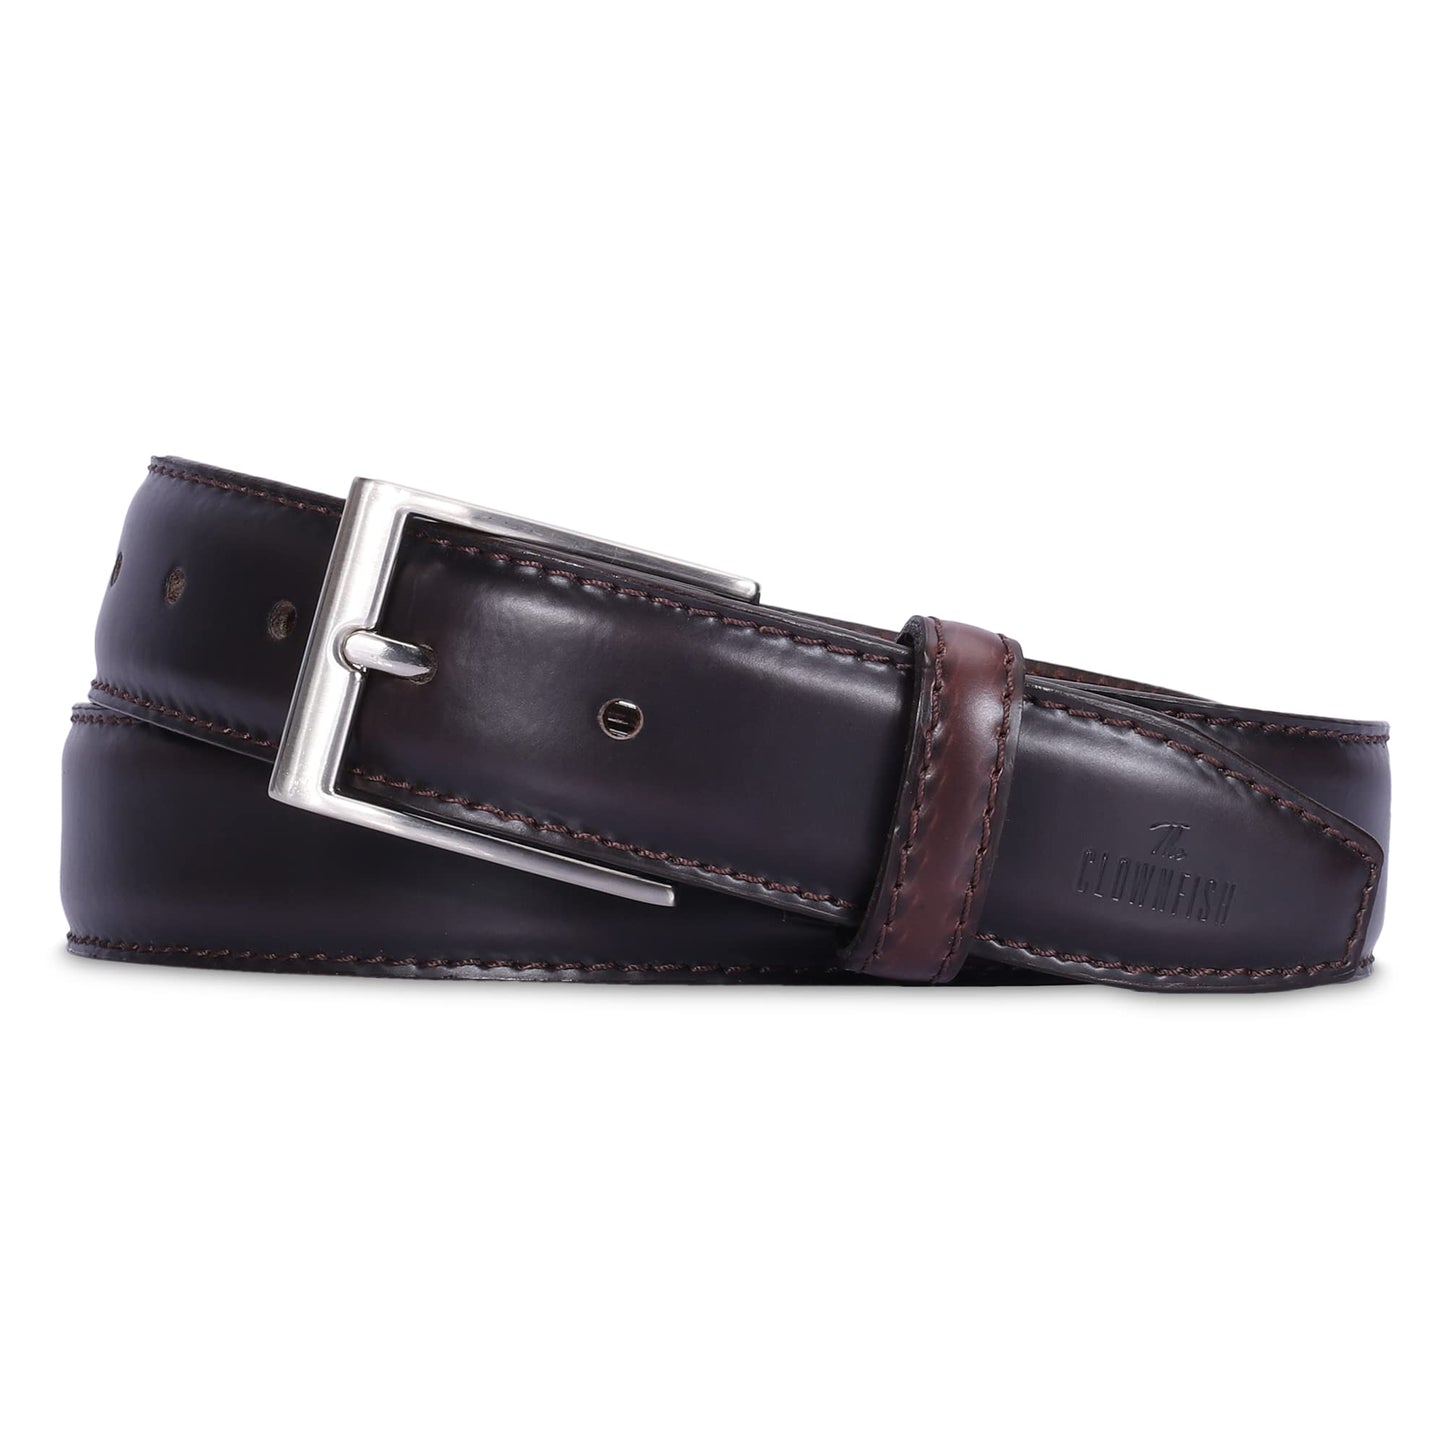 THE CLOWNFISH Men's Genuine Leather Belt - Dark Brown (Size-32 inches)